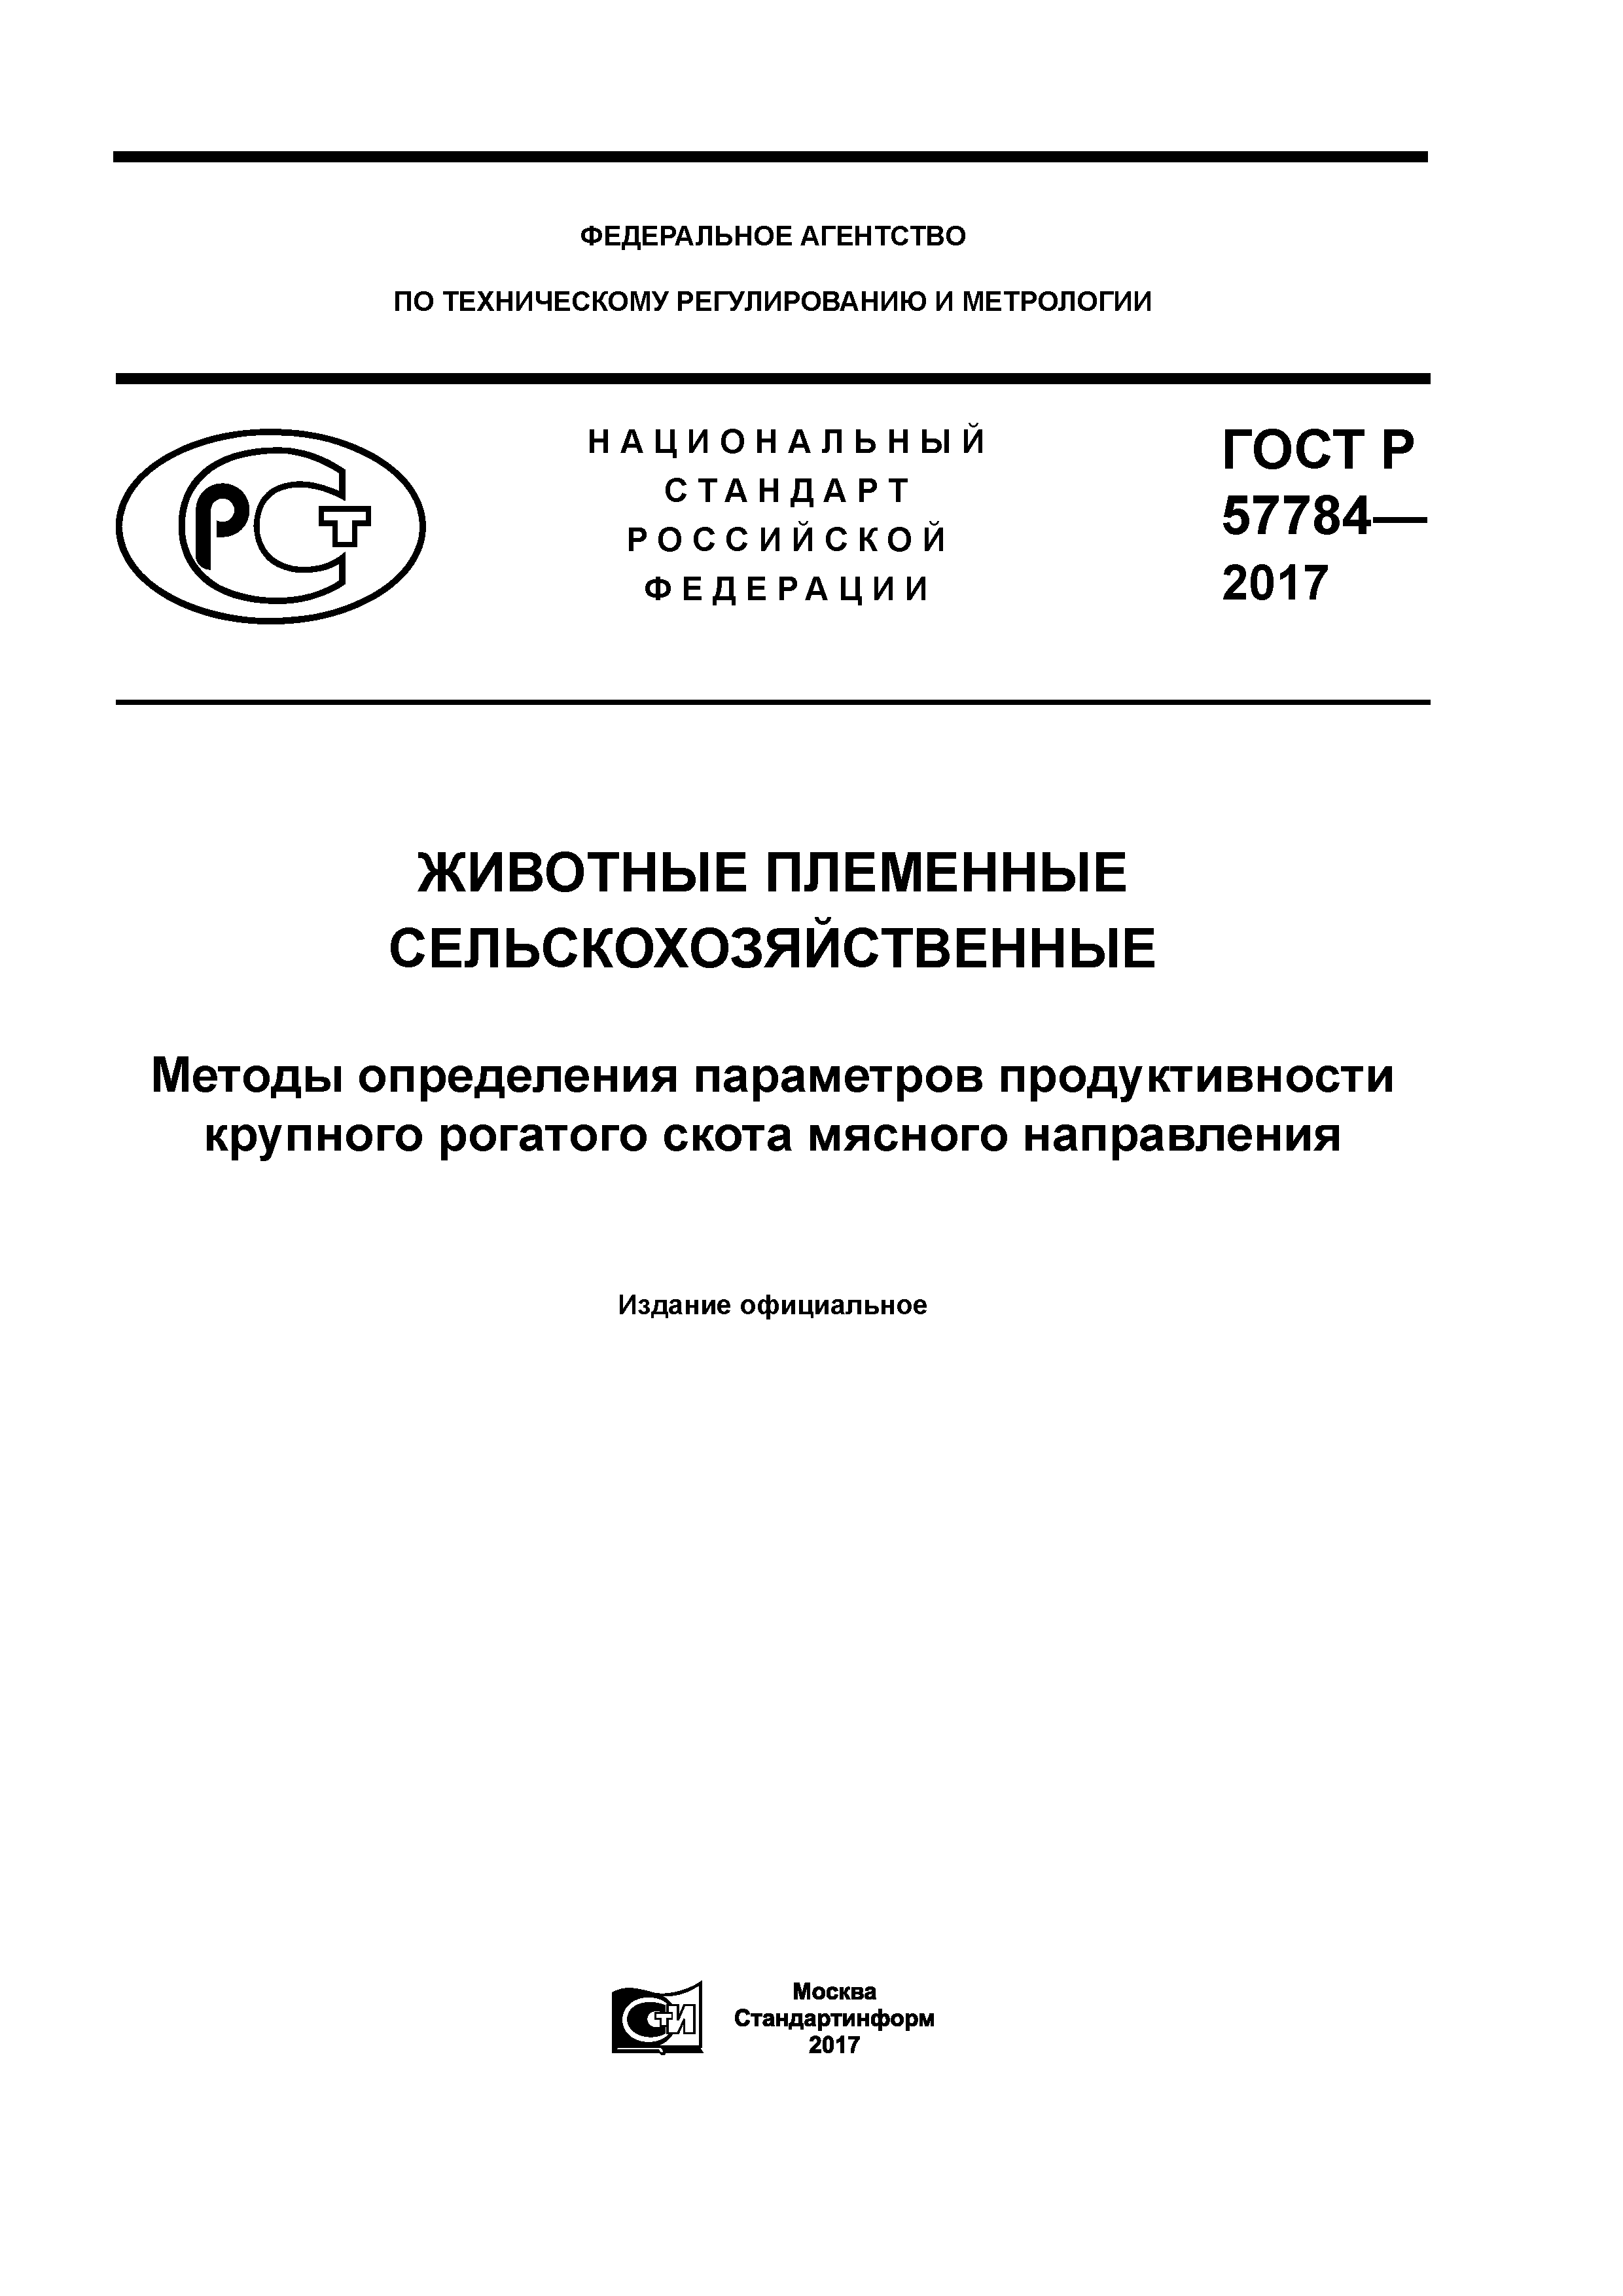 ГОСТ Р 57784-2017